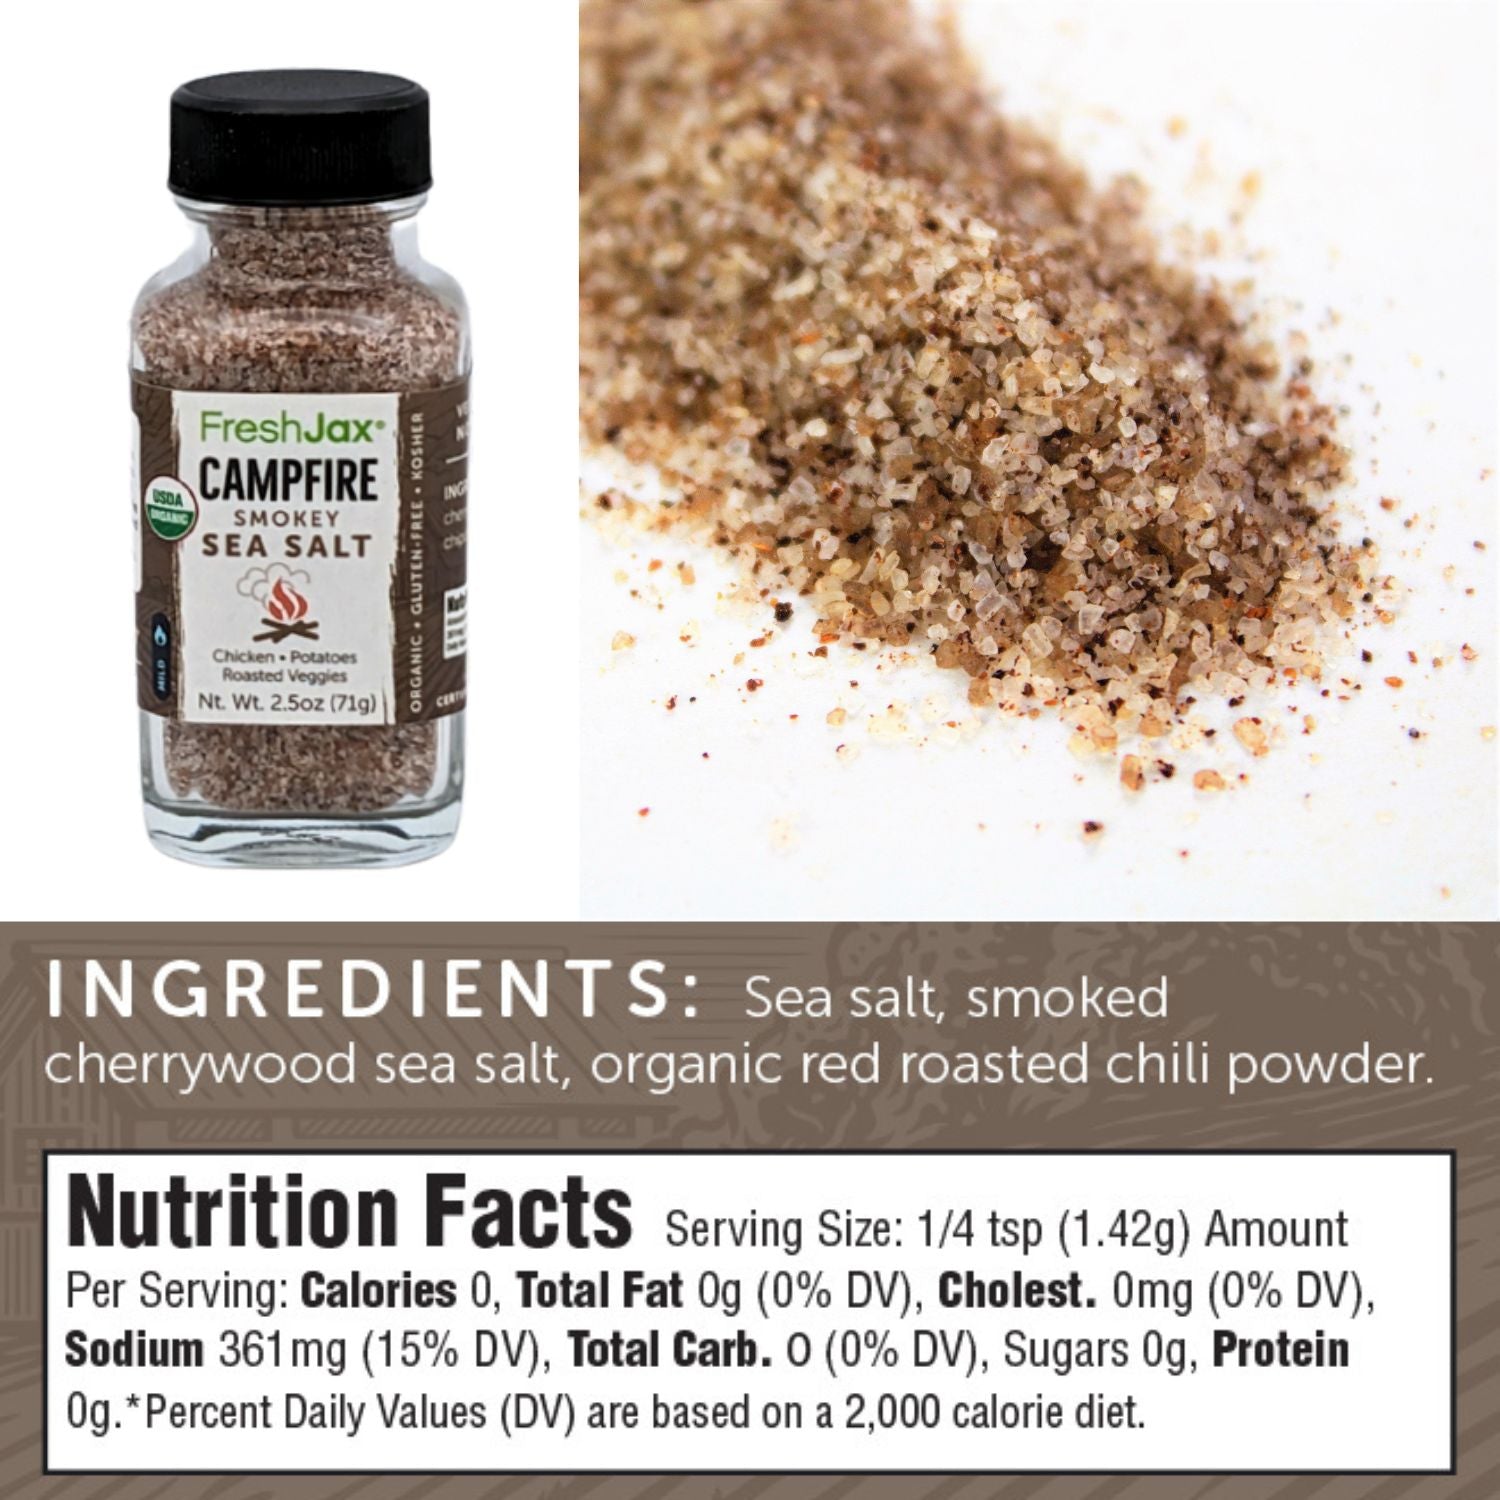 FreshJax Campfire Smokey Sea Salt Ingredients and Nutritional Information